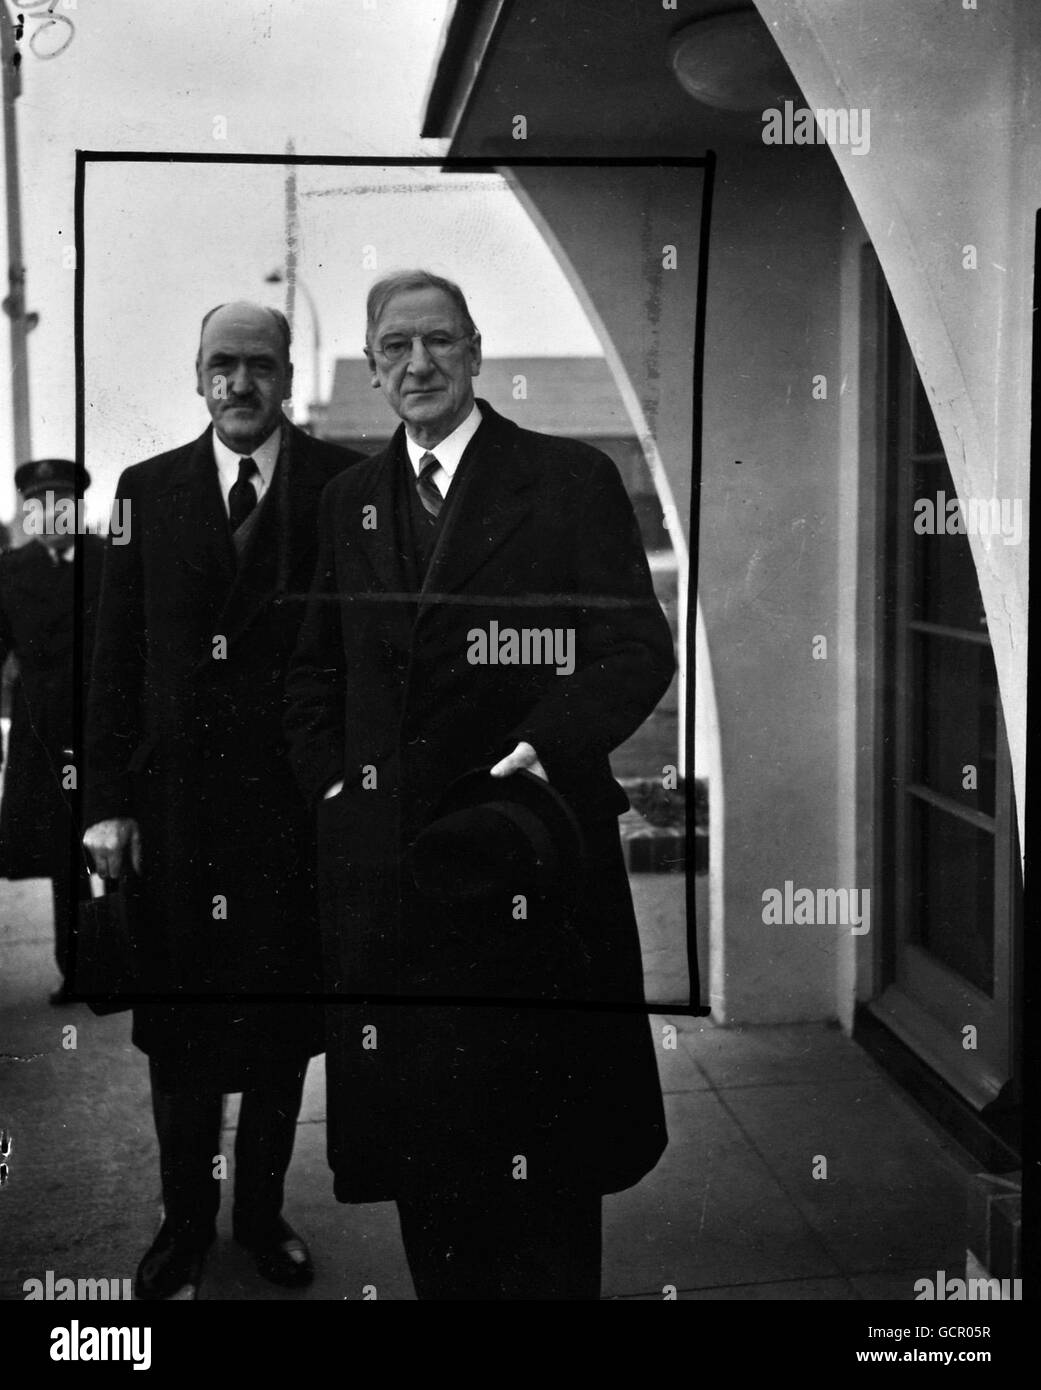 Politics - Mr. Eamon de Valera & Mr. Frank Aiken - London Stock Photo